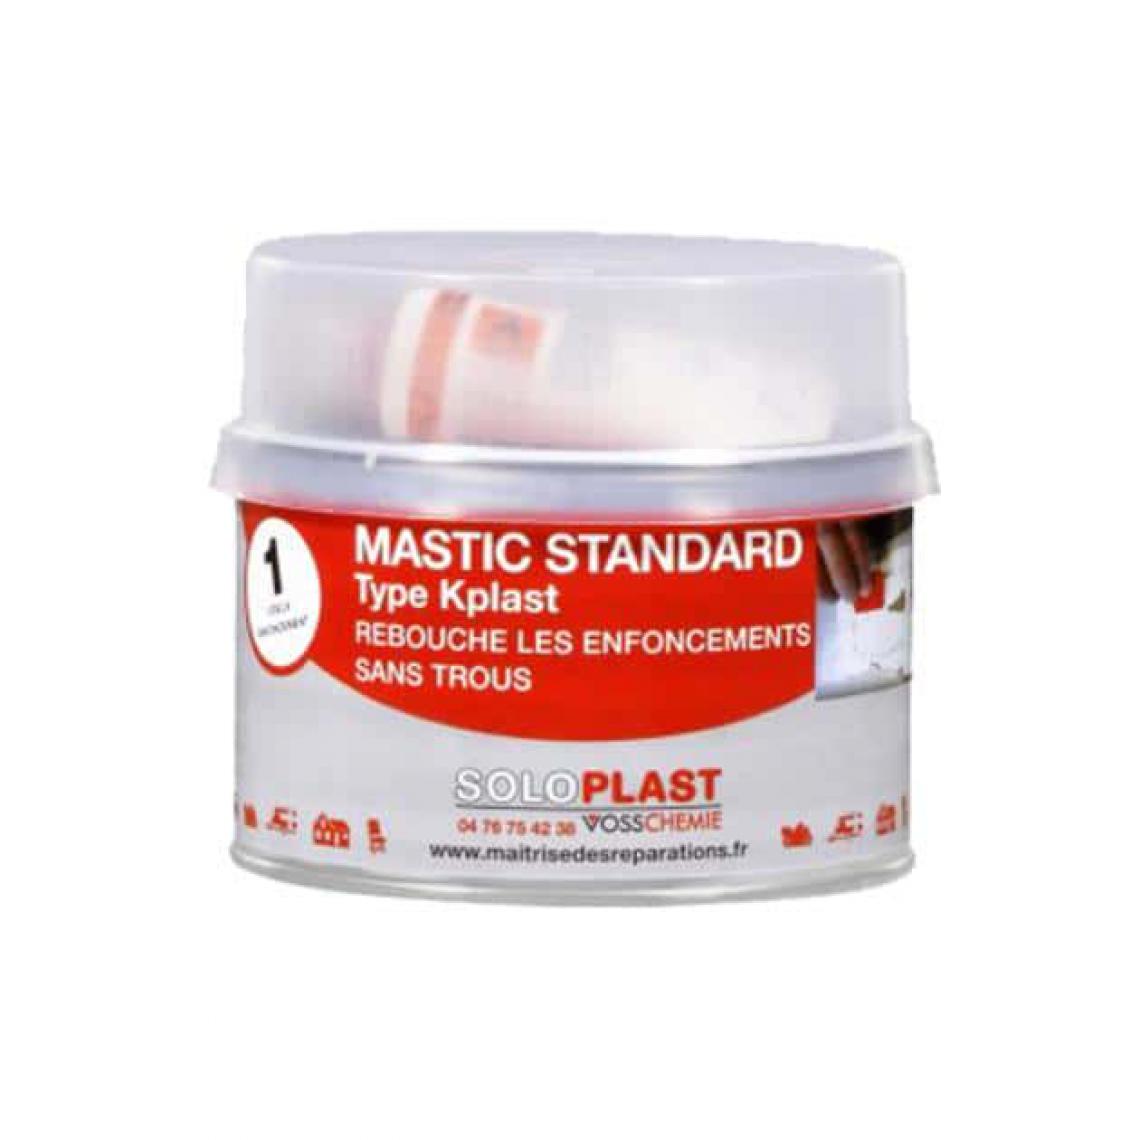 Soloplast - Mastic standard Soloplast Kplast 188g avec durcisseur - Colle & adhésif